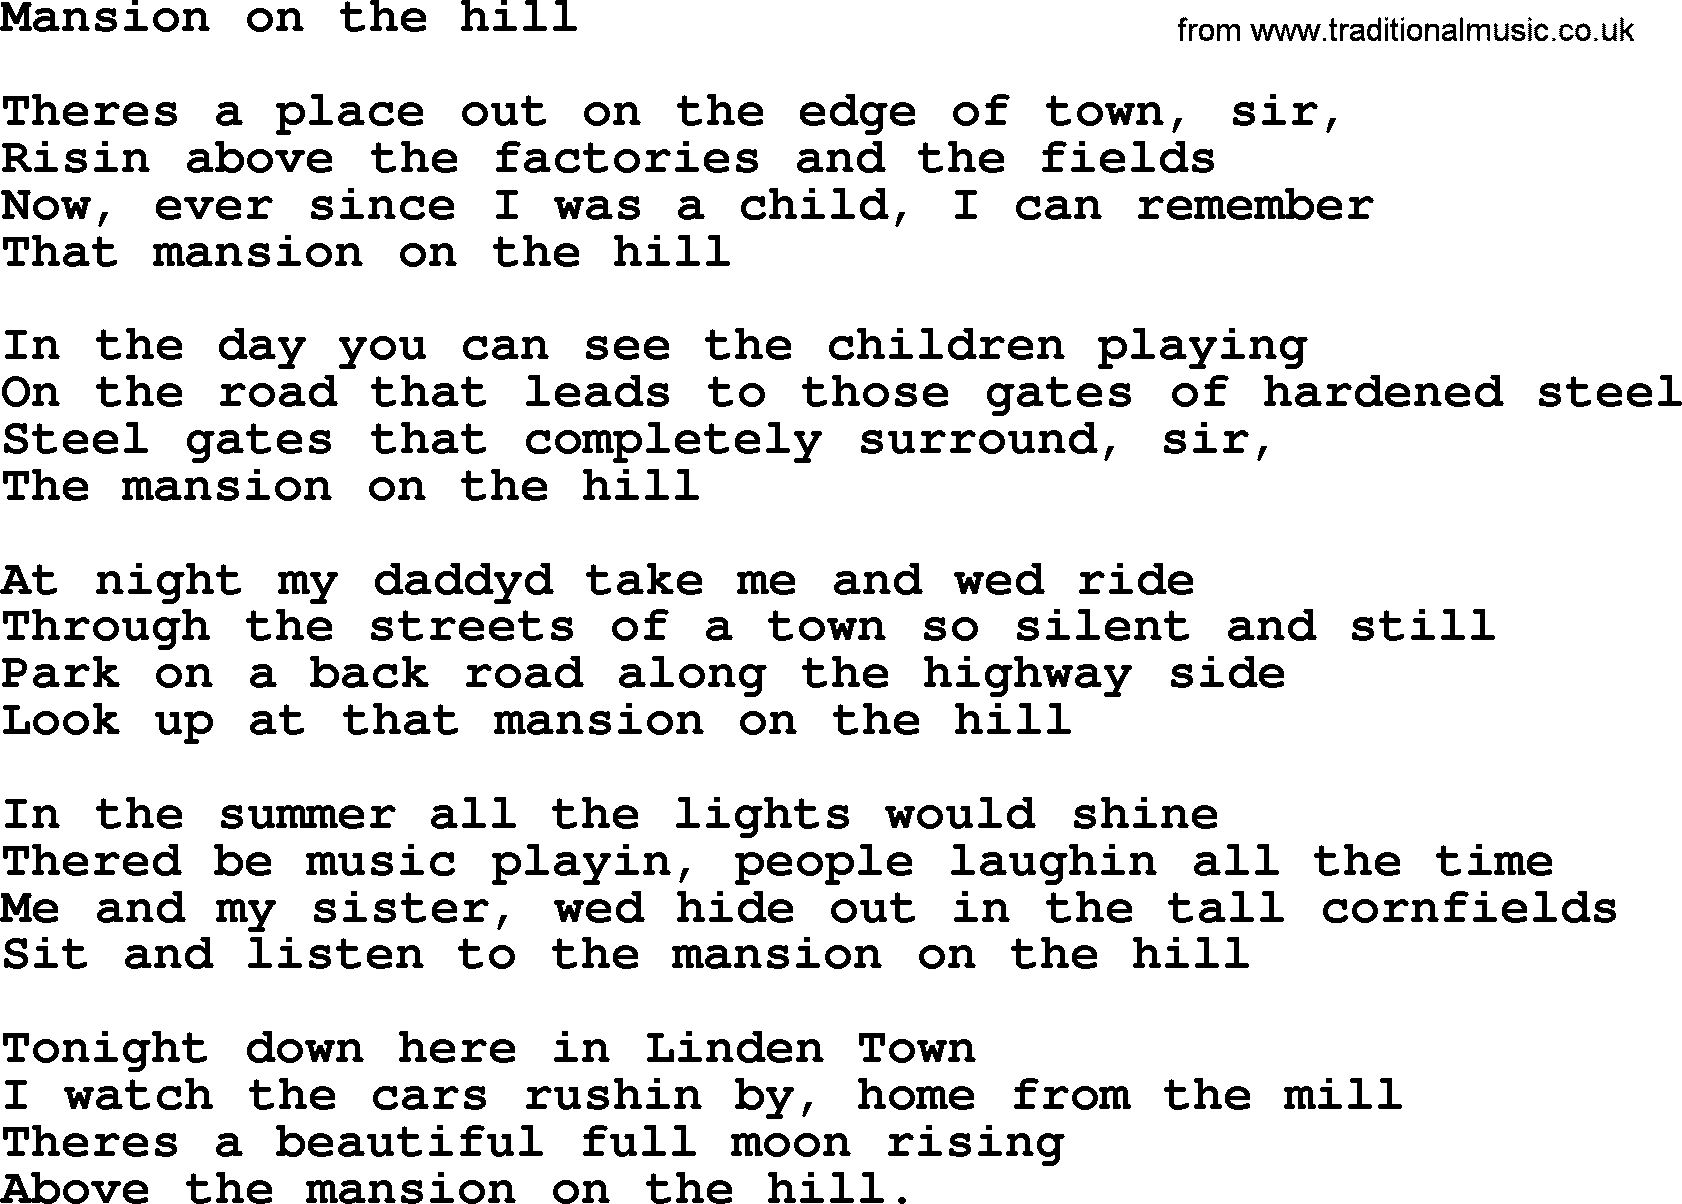 Bruce Springsteen song: Mansion On The Hill lyrics